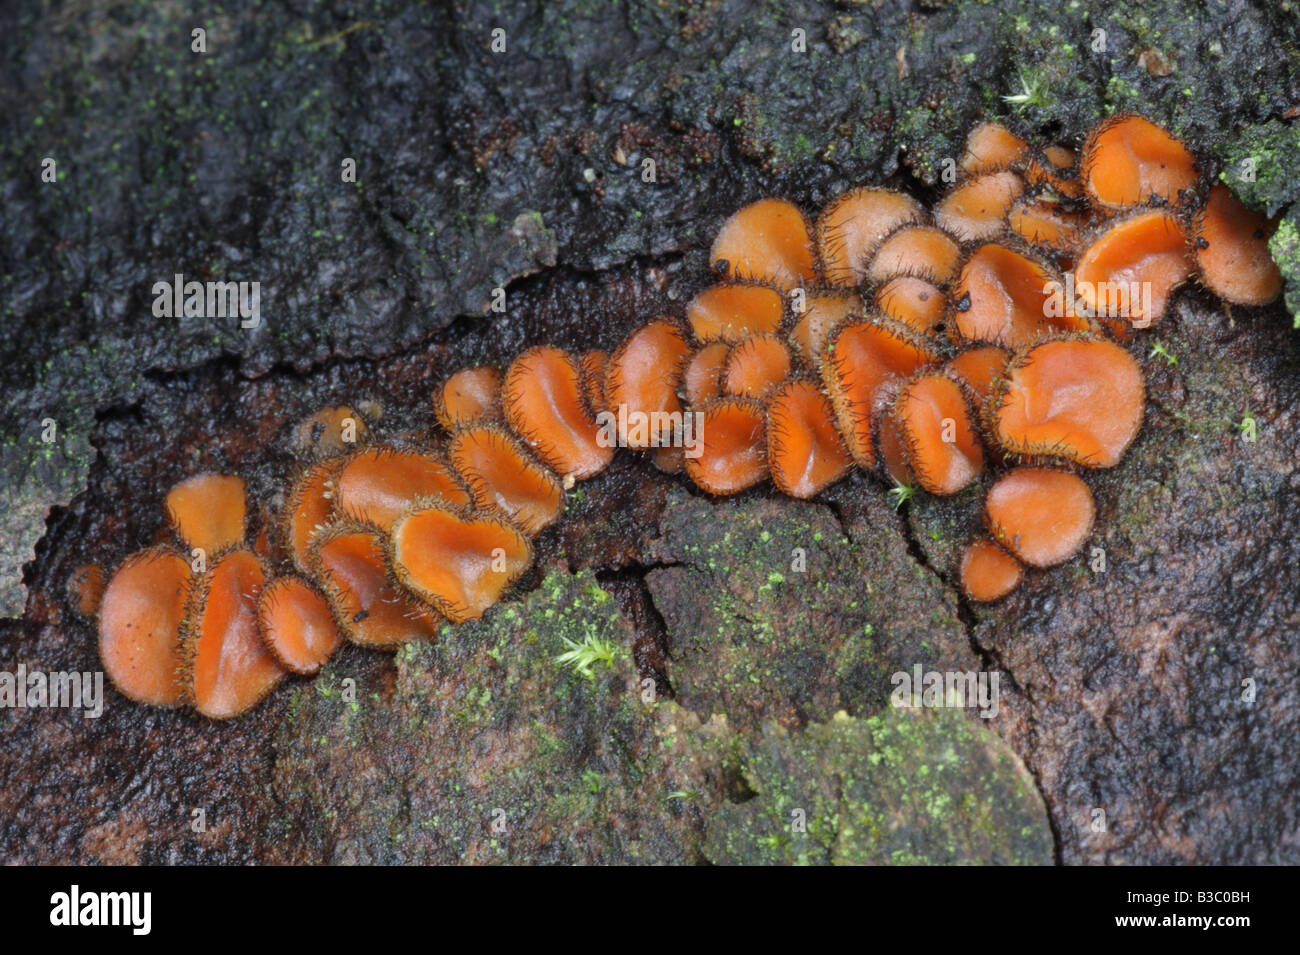 Common Eyelash Fungus - Scutellinia scutellata Stock Photo